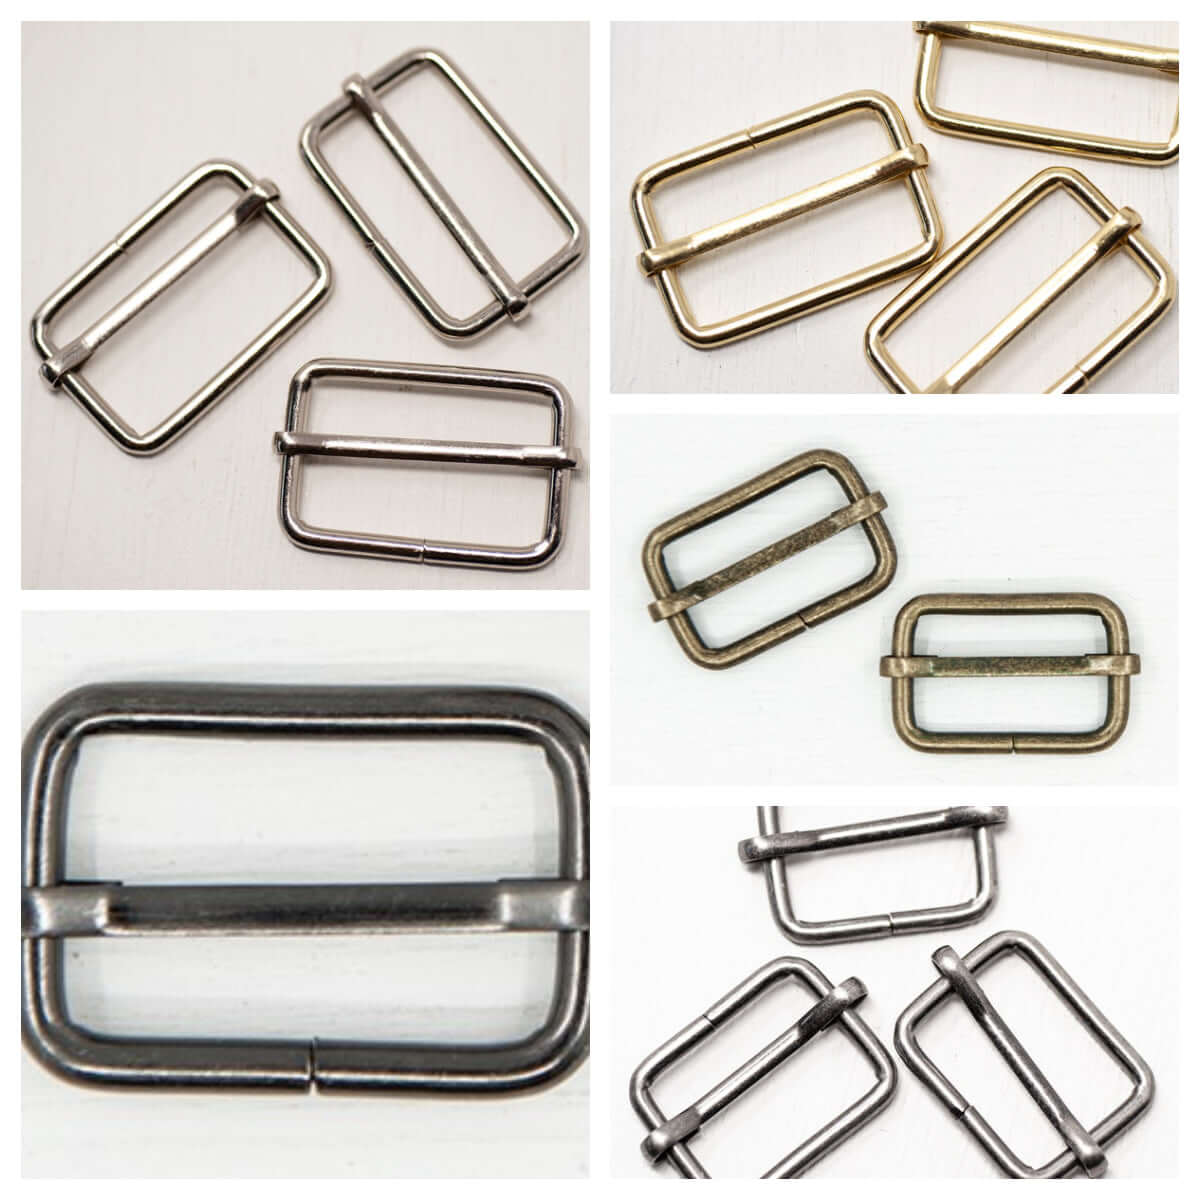 2 x  metal strap slider buckle for bag making and belts. 25/32/38 mm.